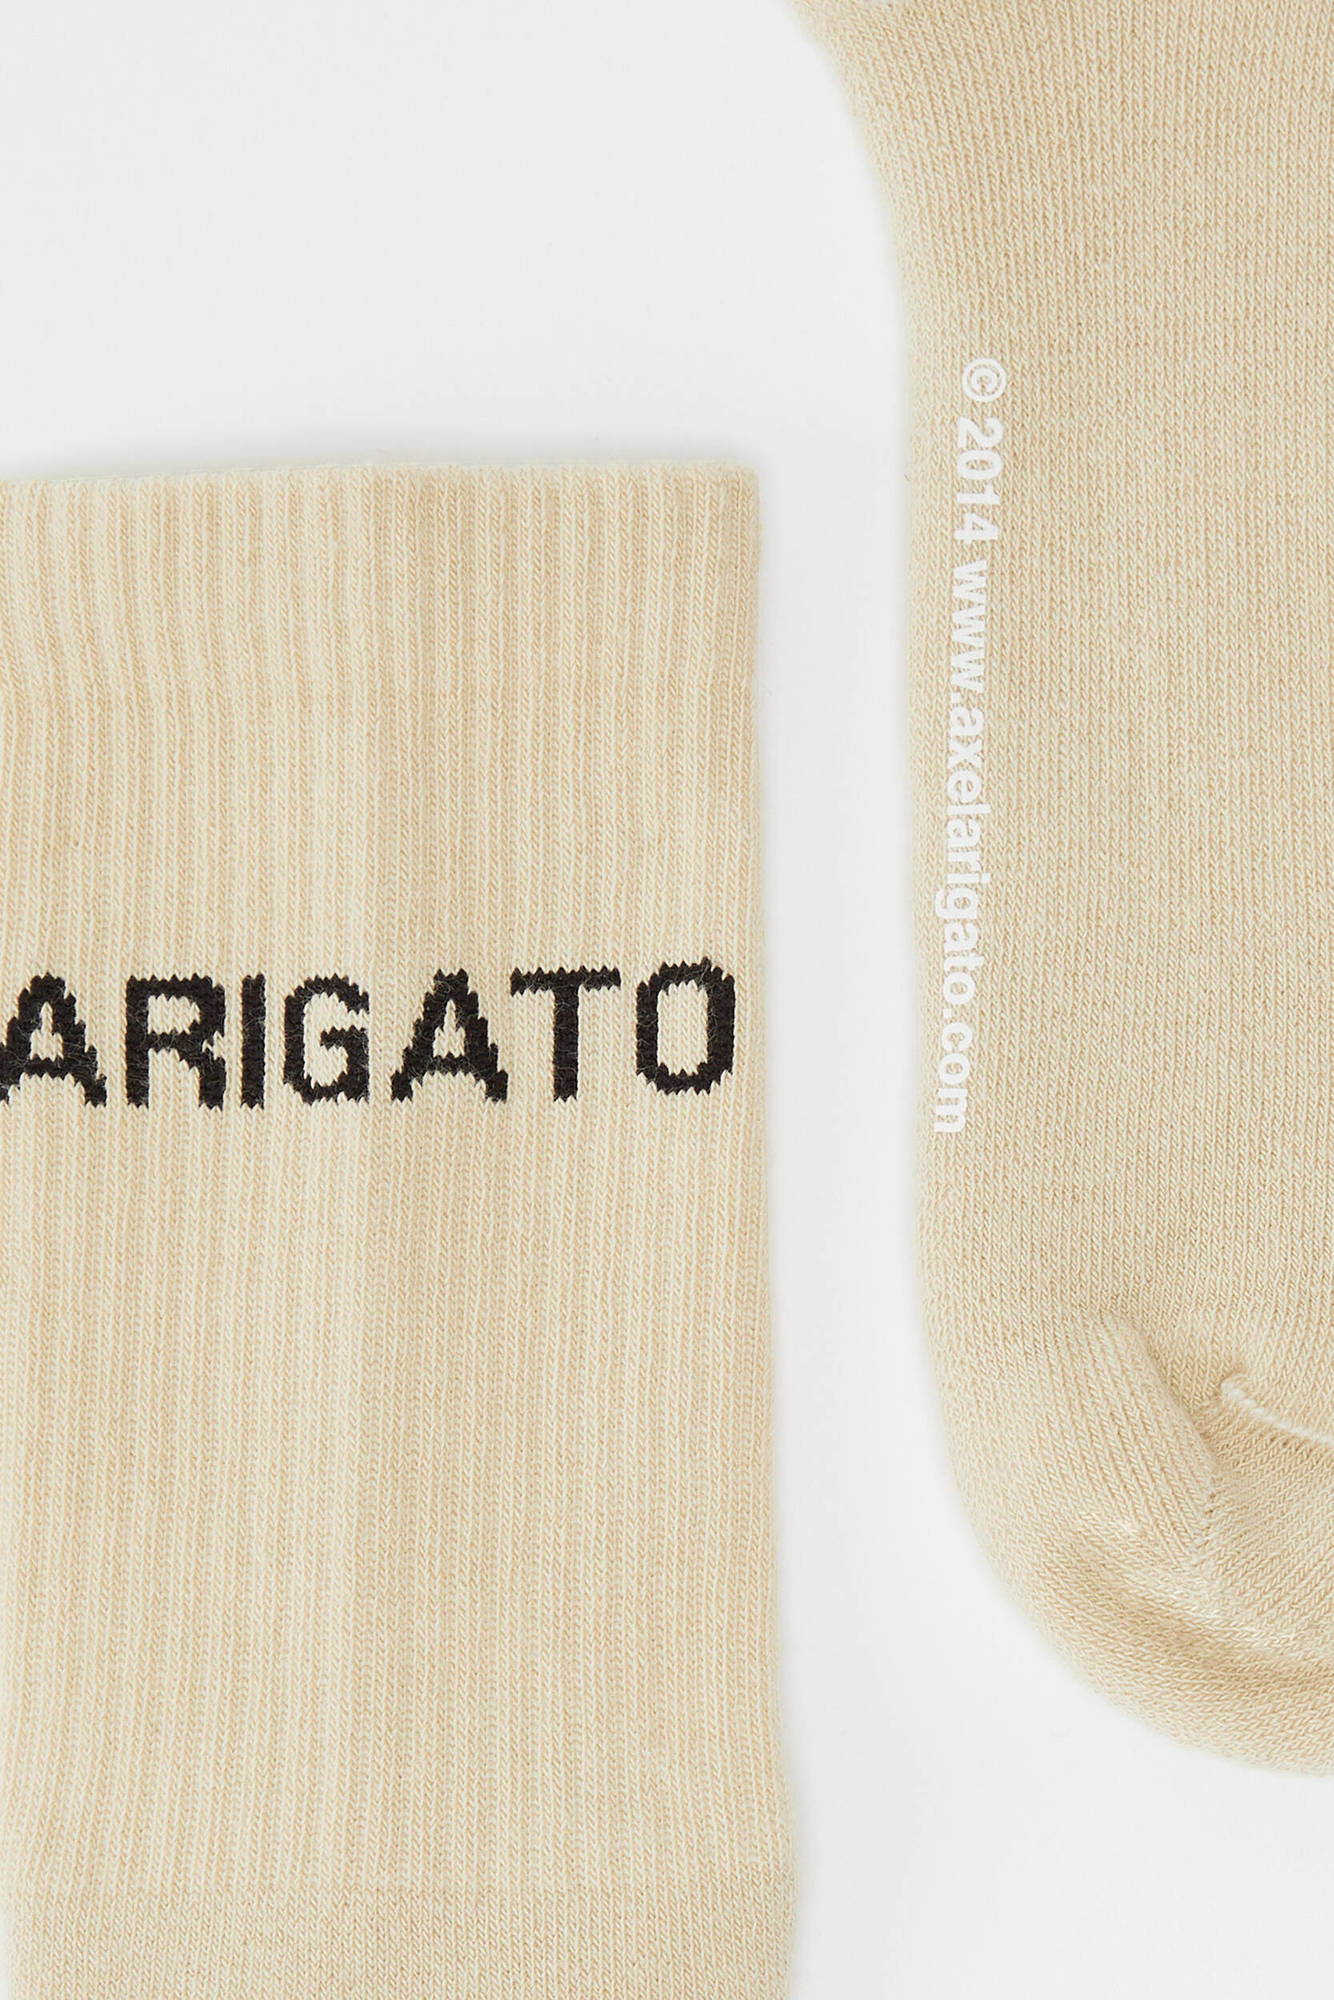 Arigato Logo Tube Socks